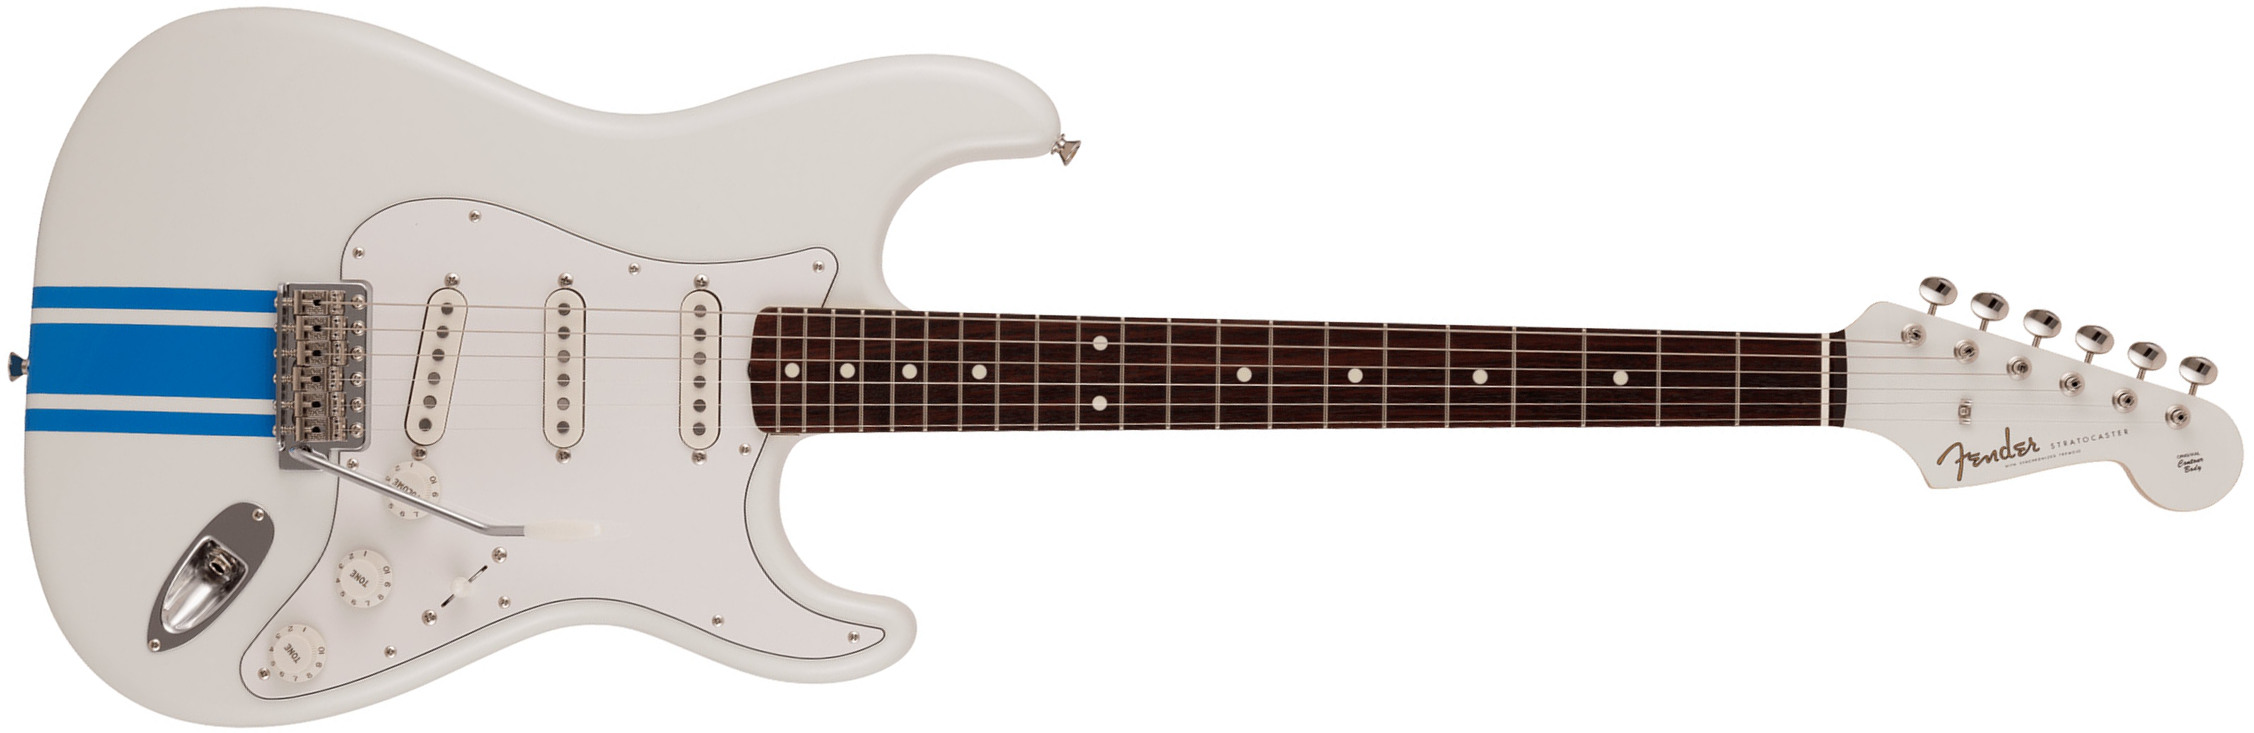 Fender Strat Traditional 60s Mij Jap 3s Trem Rw - Olympic White W/ Blue Competition Stripe - Guitarra eléctrica con forma de str. - Main picture